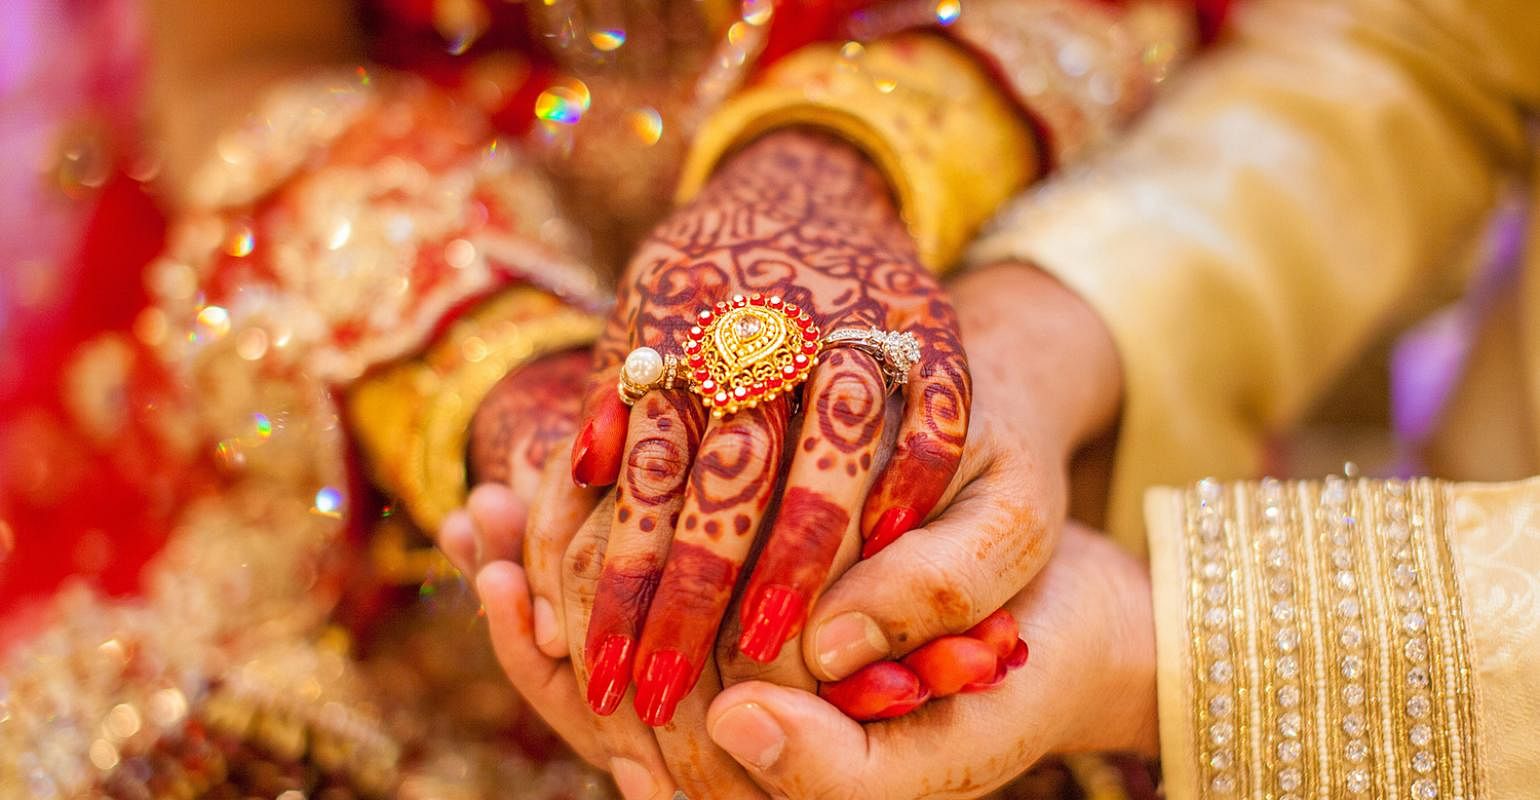 pakistan offers free reception on fourth wedding